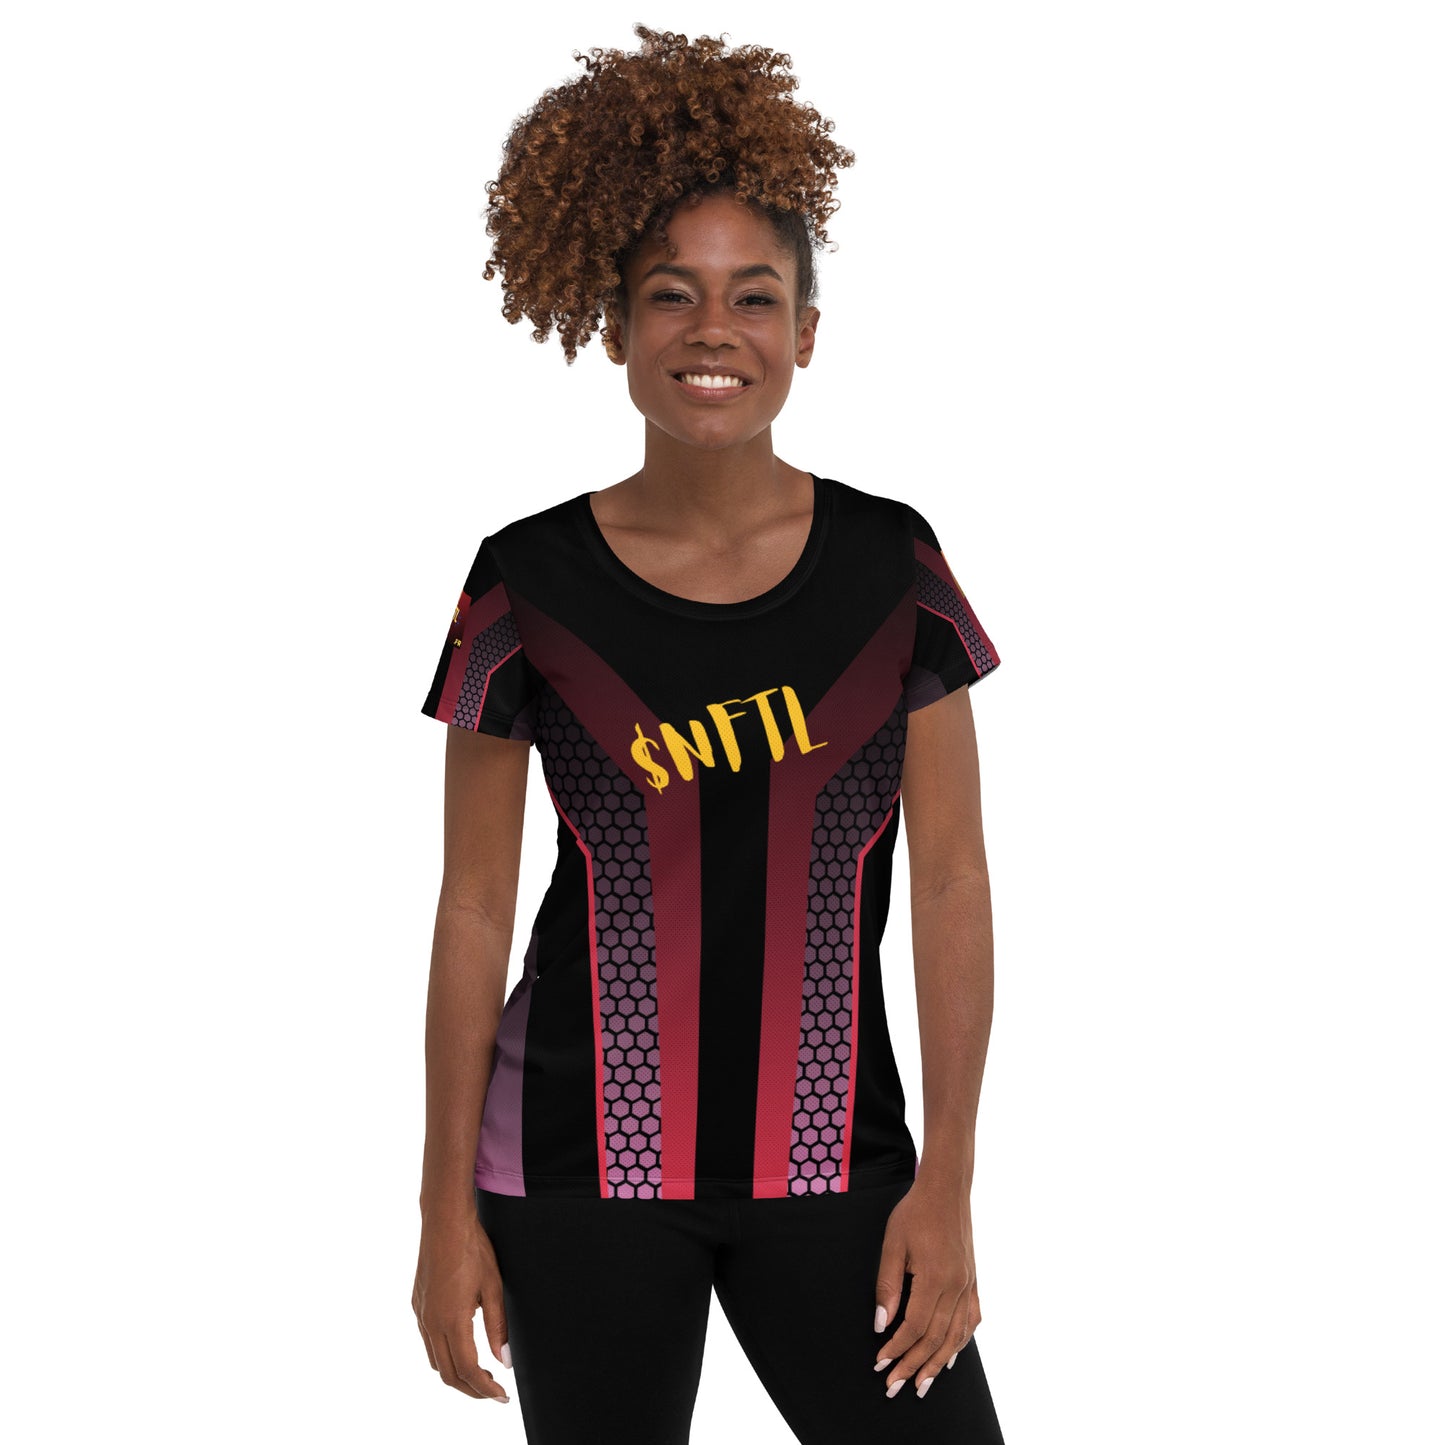 $NFTL Women's Athletic T-shirt